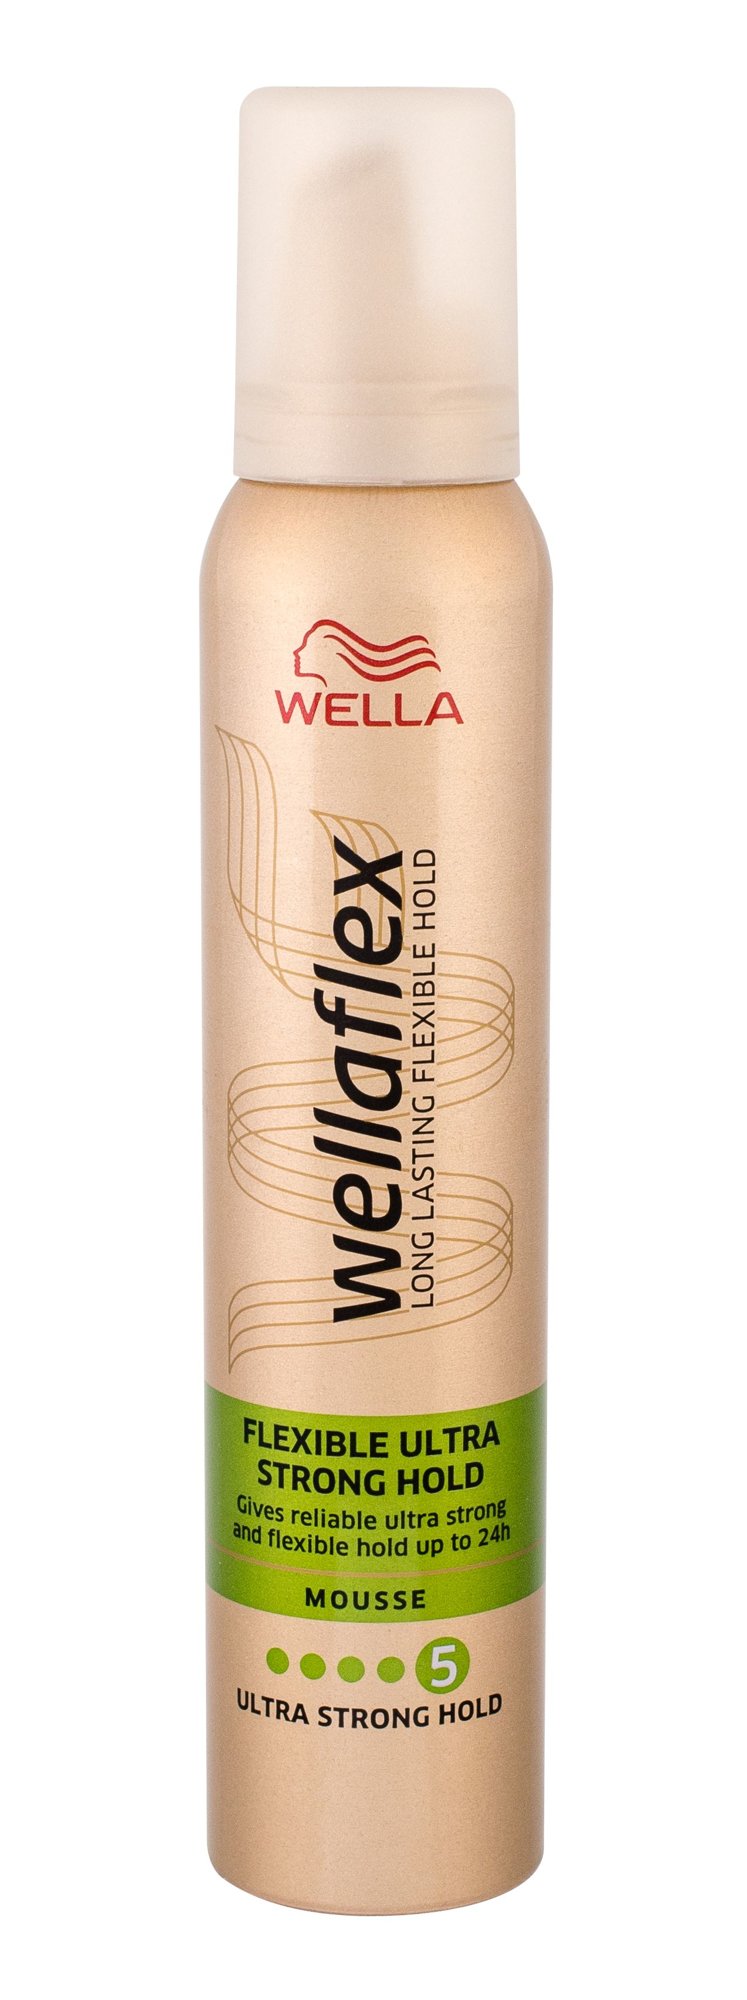 Wella Wellaflex Flexible Ultra Strong Hold 200ml plaukų putos (Pažeista pakuotė)